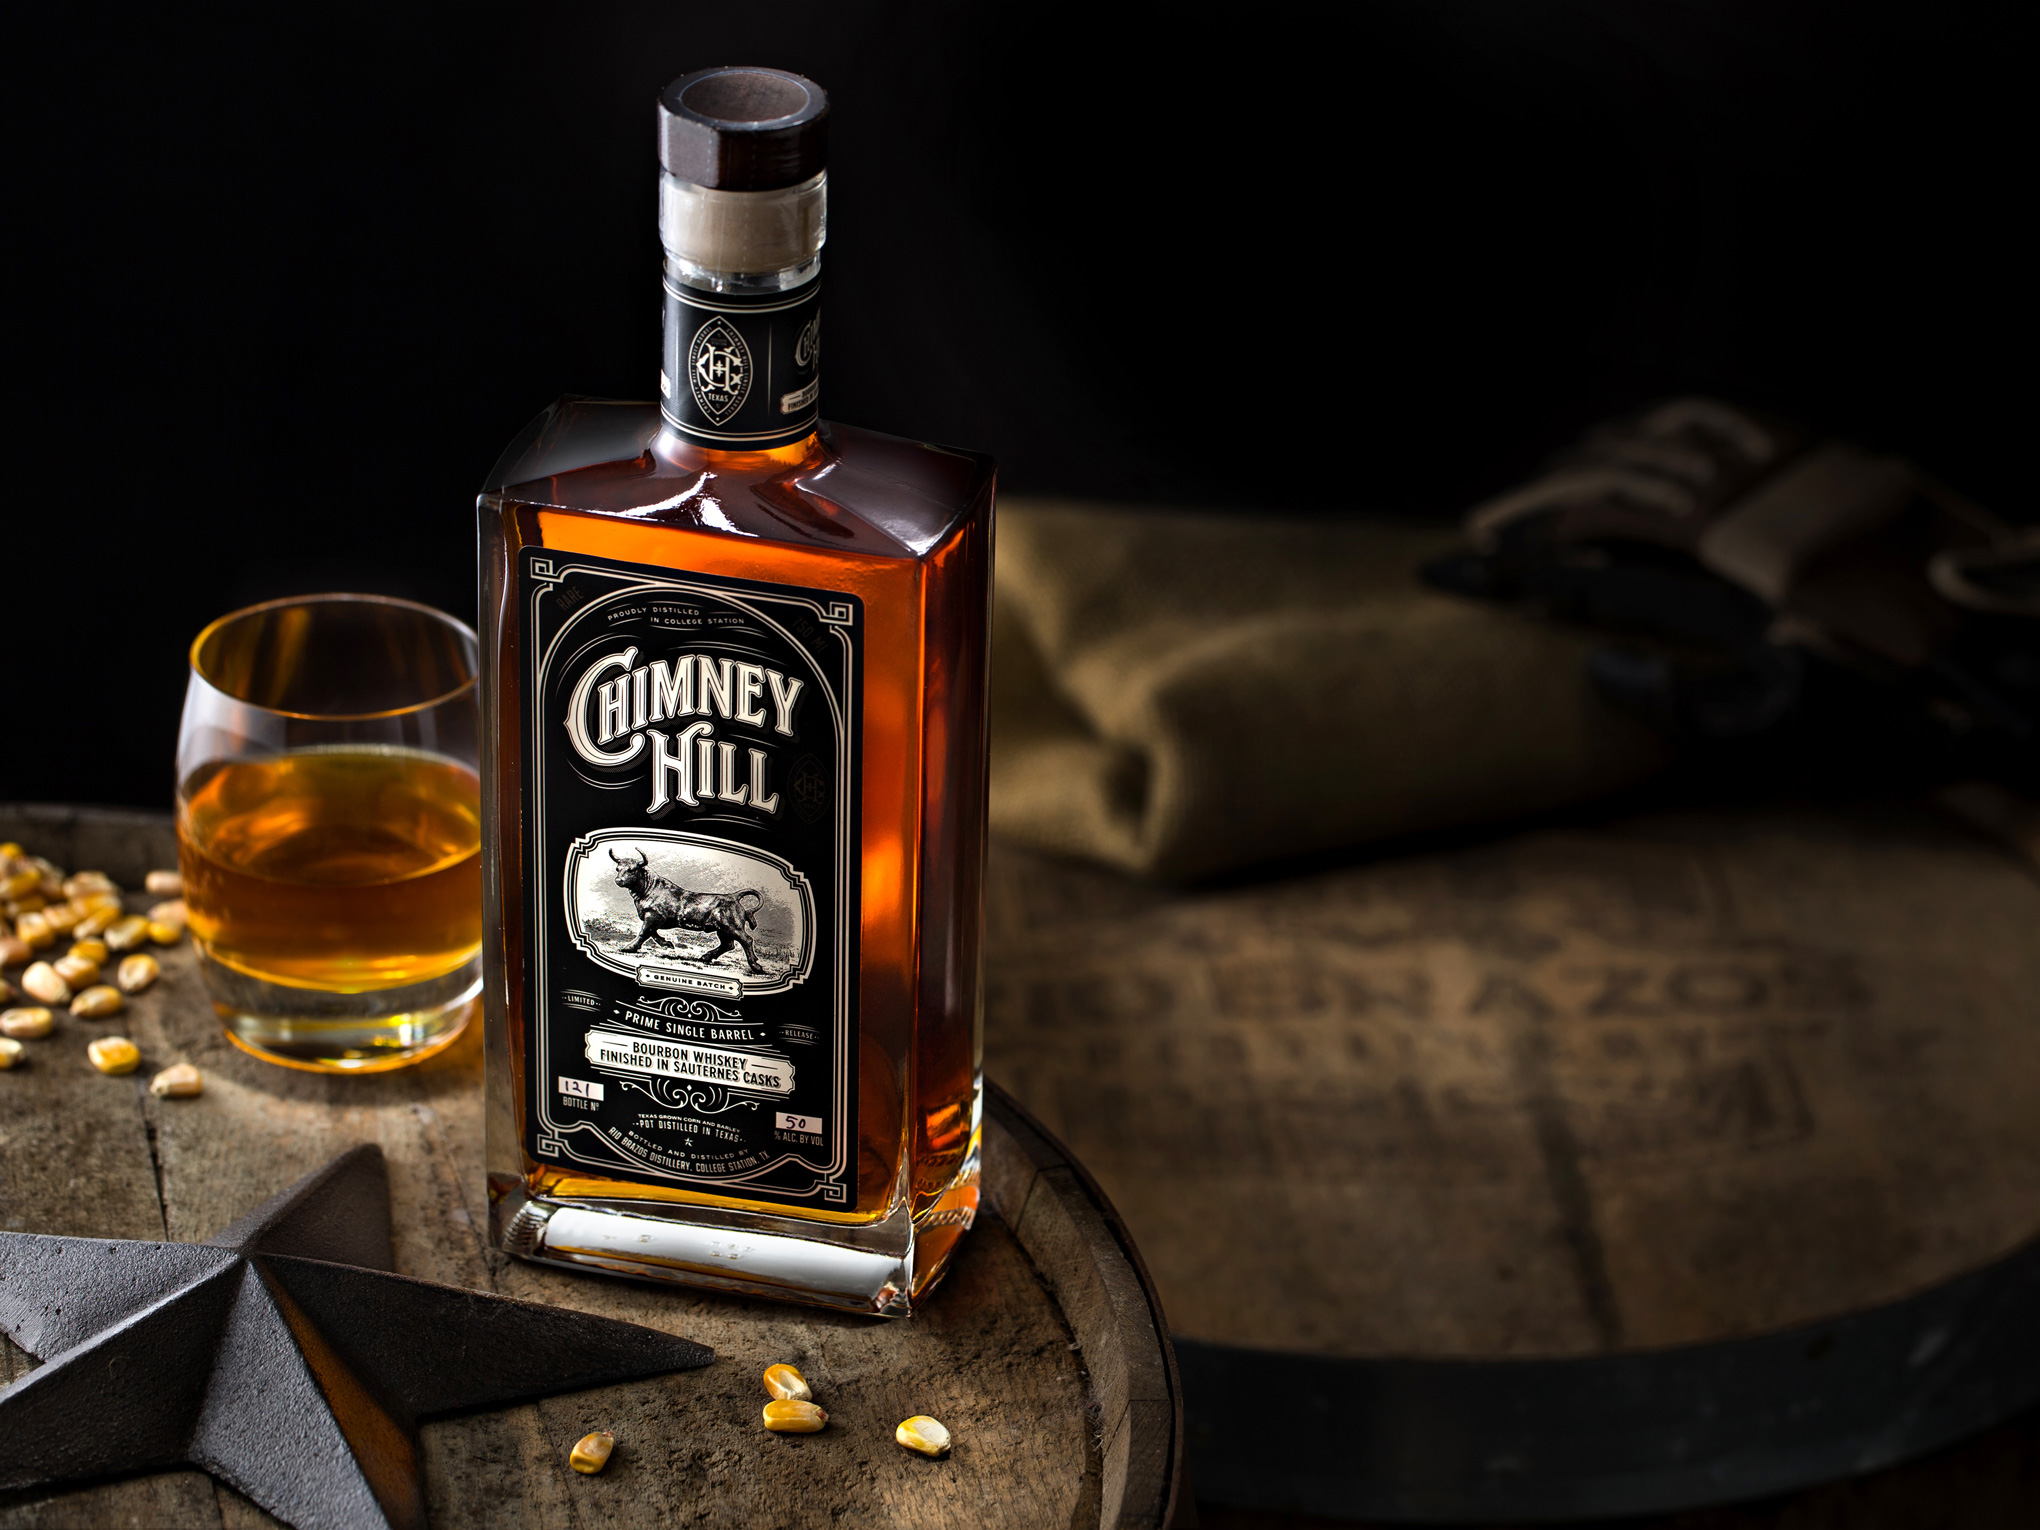 Chimney Hill Prime Single Barrel Bourbon Whiskey